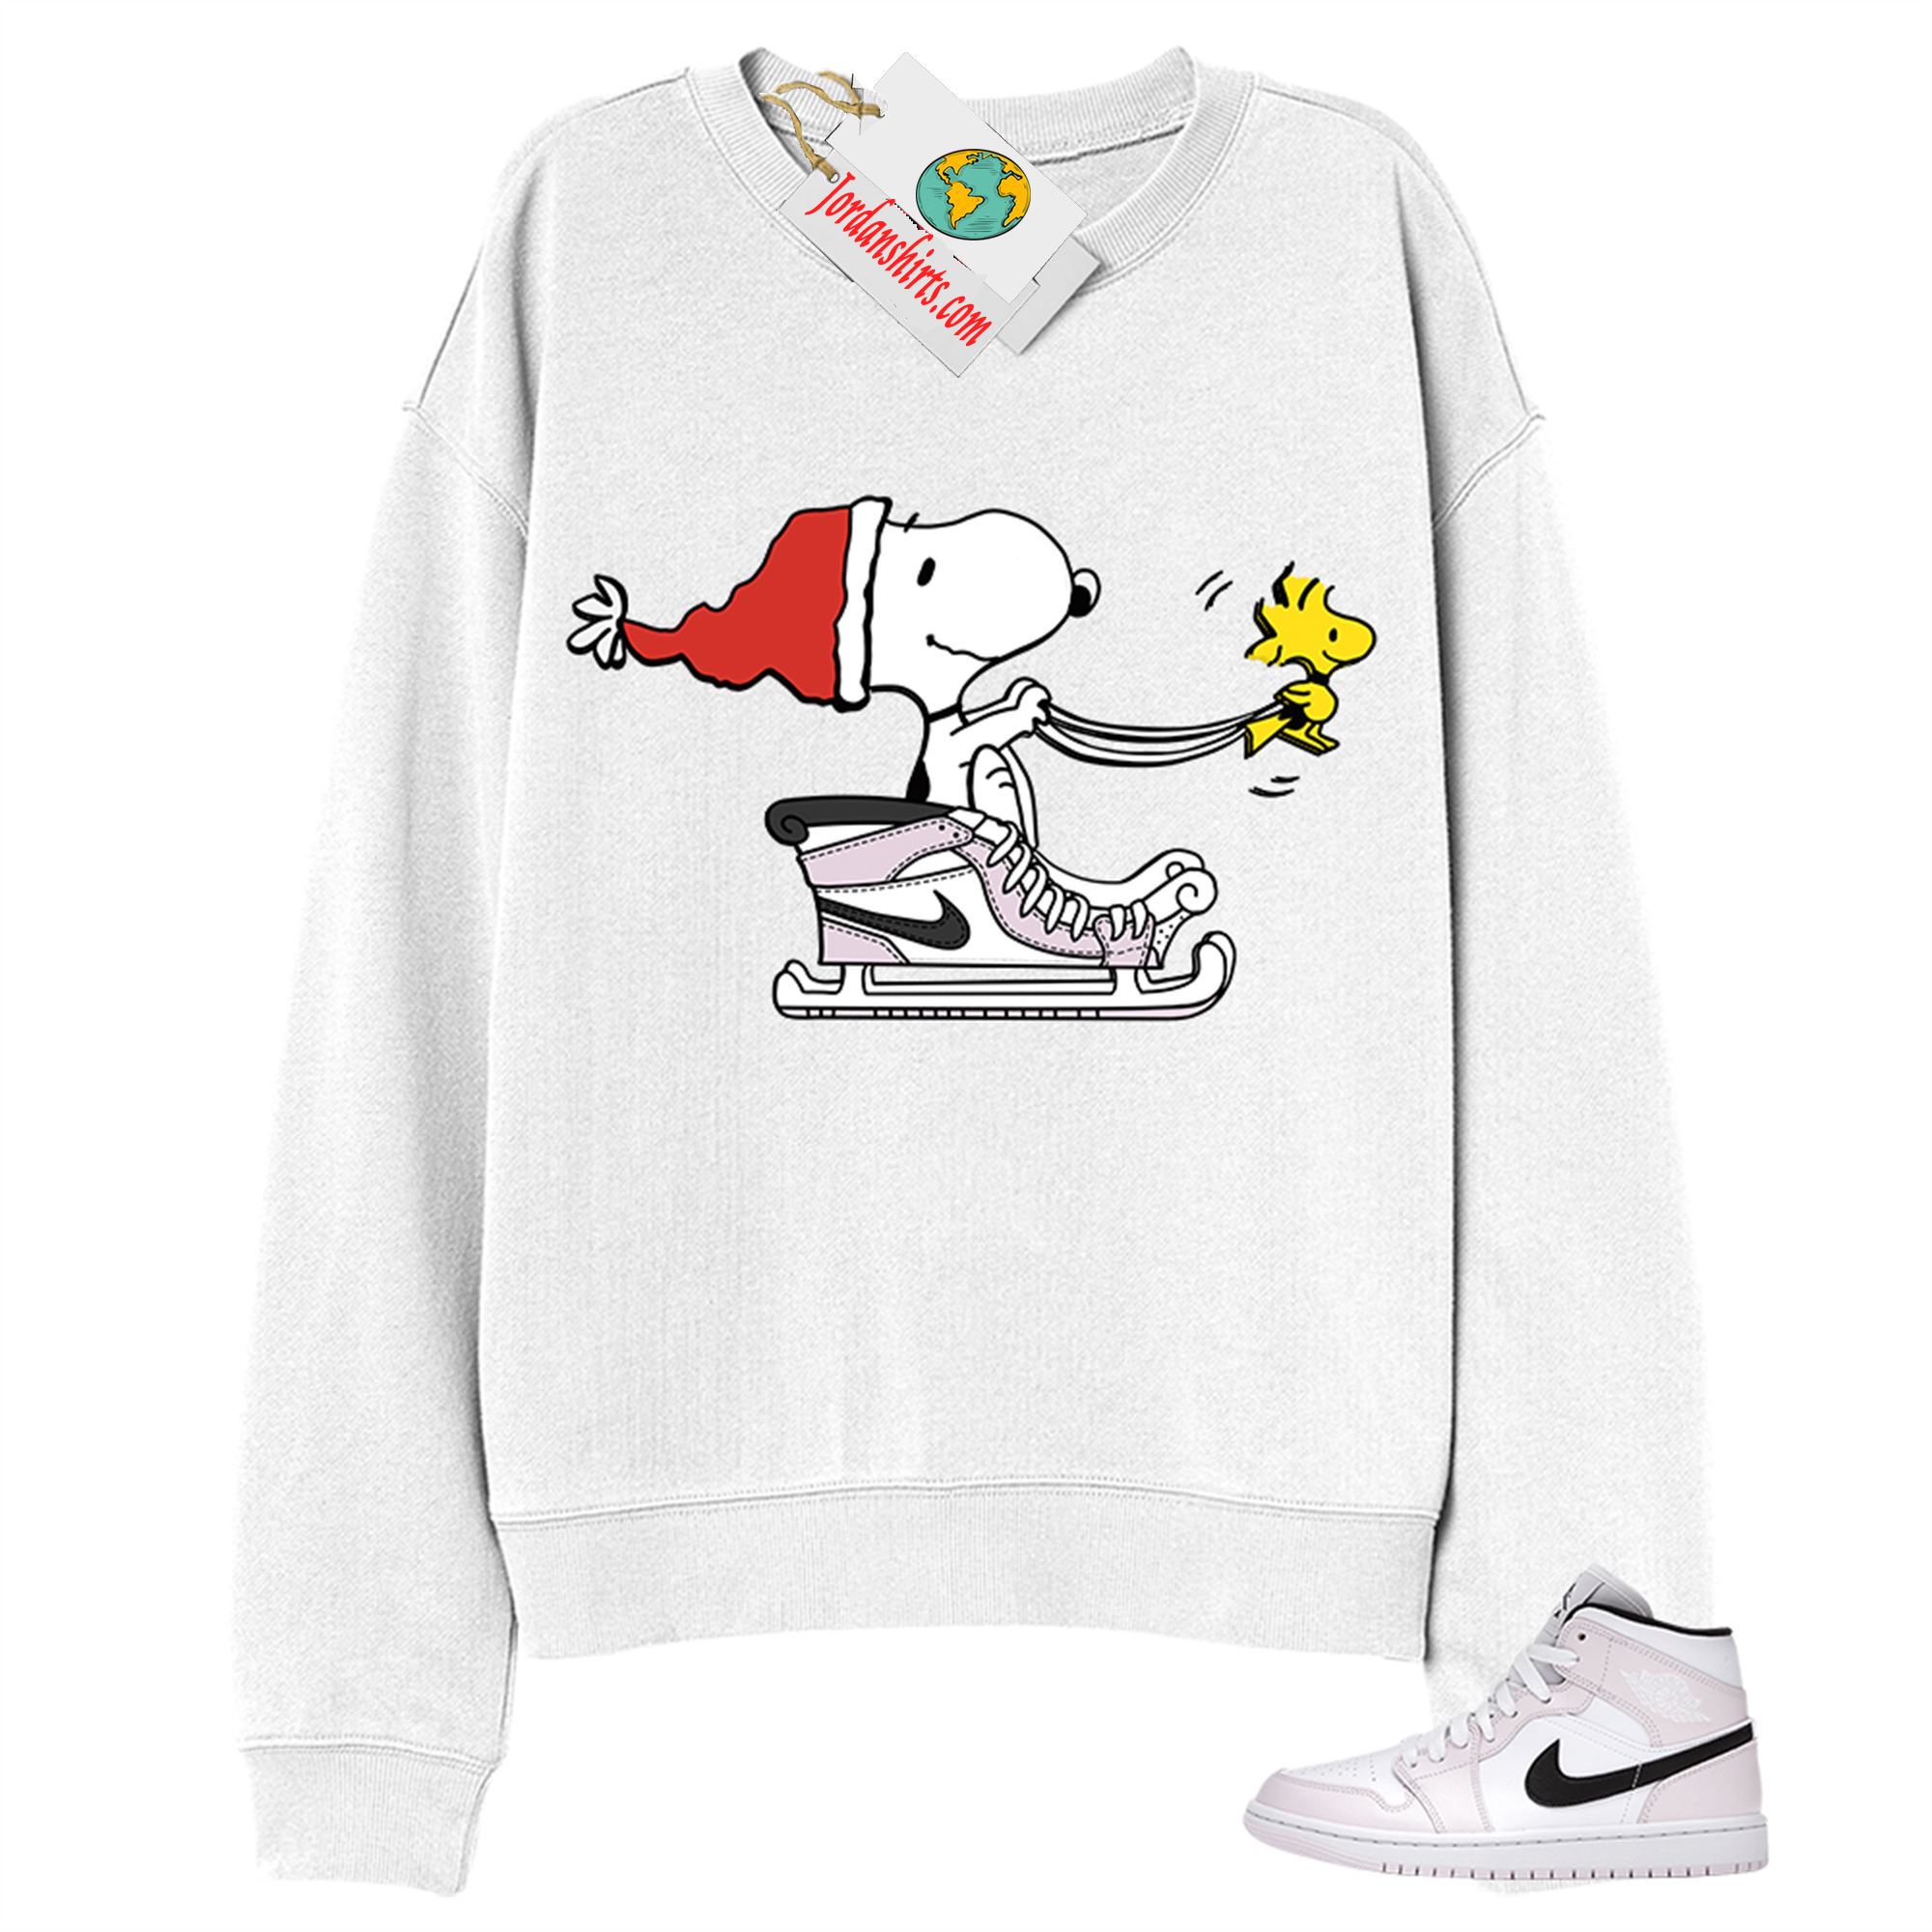 Jordan 1 Sweatshirt, Snoopy Dog Christmas White Sweatshirt Air Jordan 1 Barely Rose 1s Size Up To 5xl